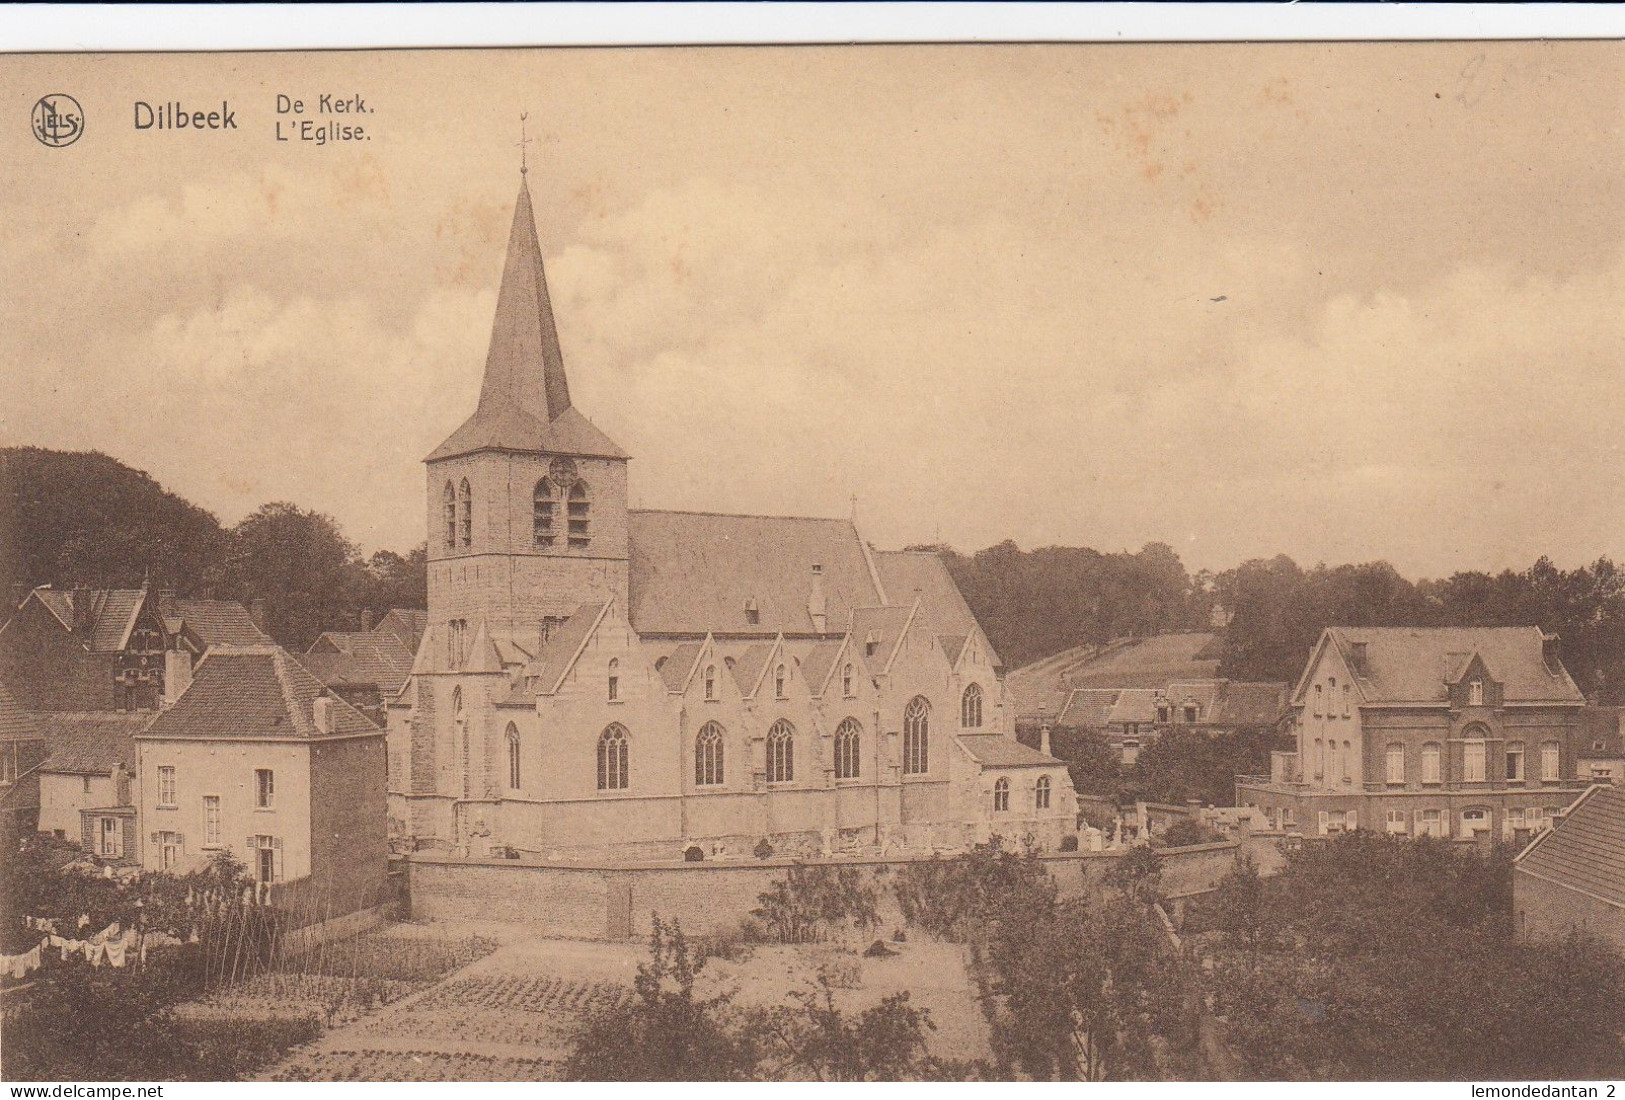 Dilbeek - De Kerk - L'Eglise - Dilbeek